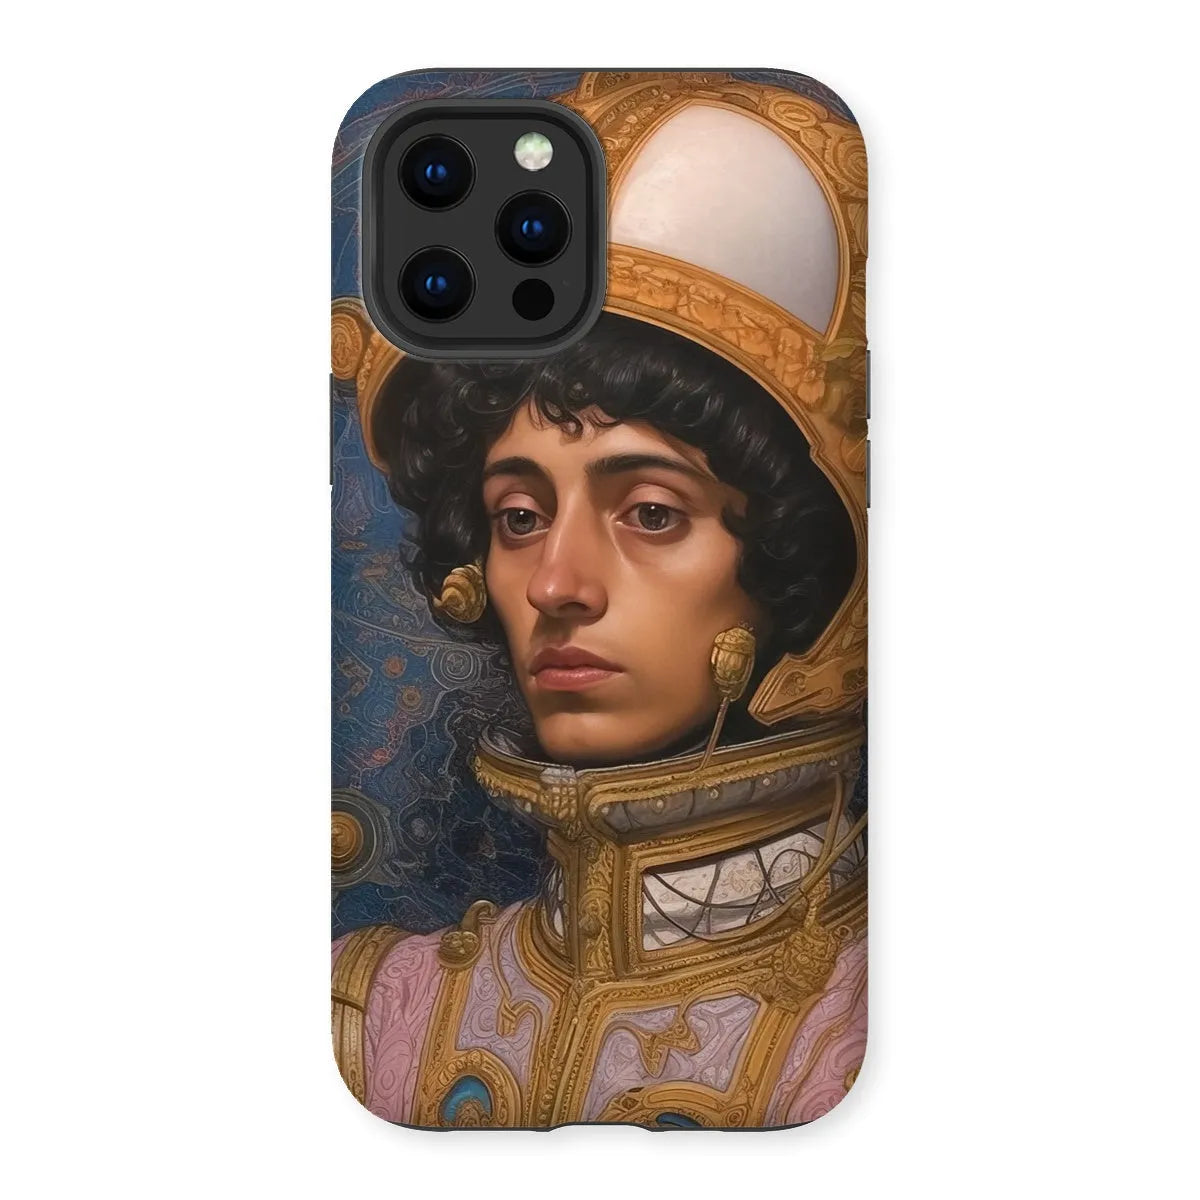 Samir The Gay Astronaut - Lgbtq Art Phone Case - Iphone 12 Pro Max / Matte - Mobile Phone Cases - Aesthetic Art